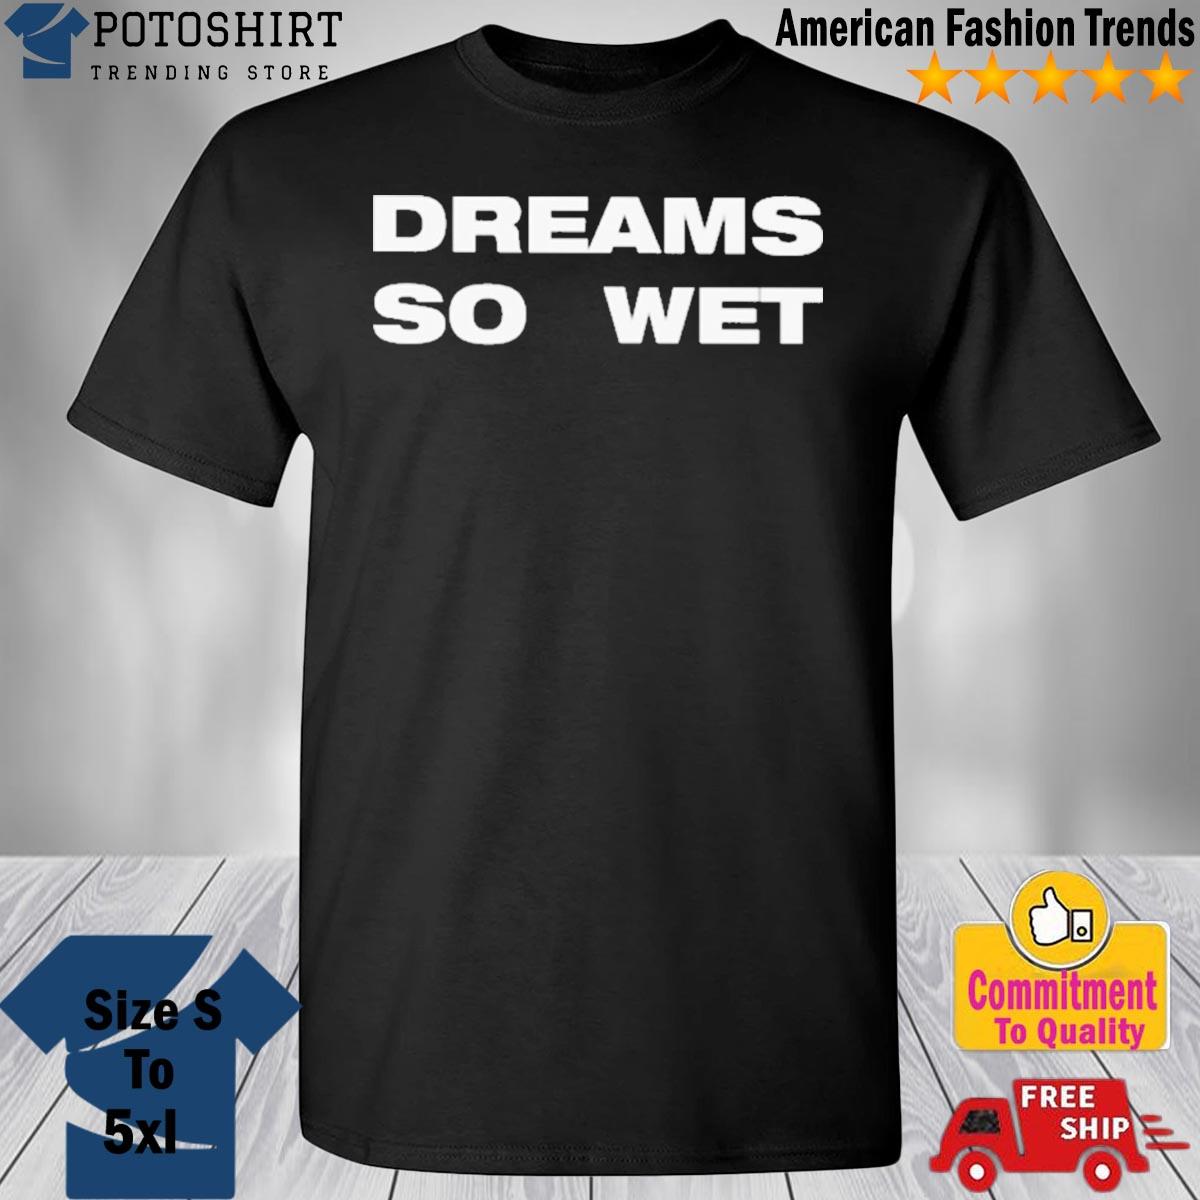 Product erika jayne dreams so wet shirt